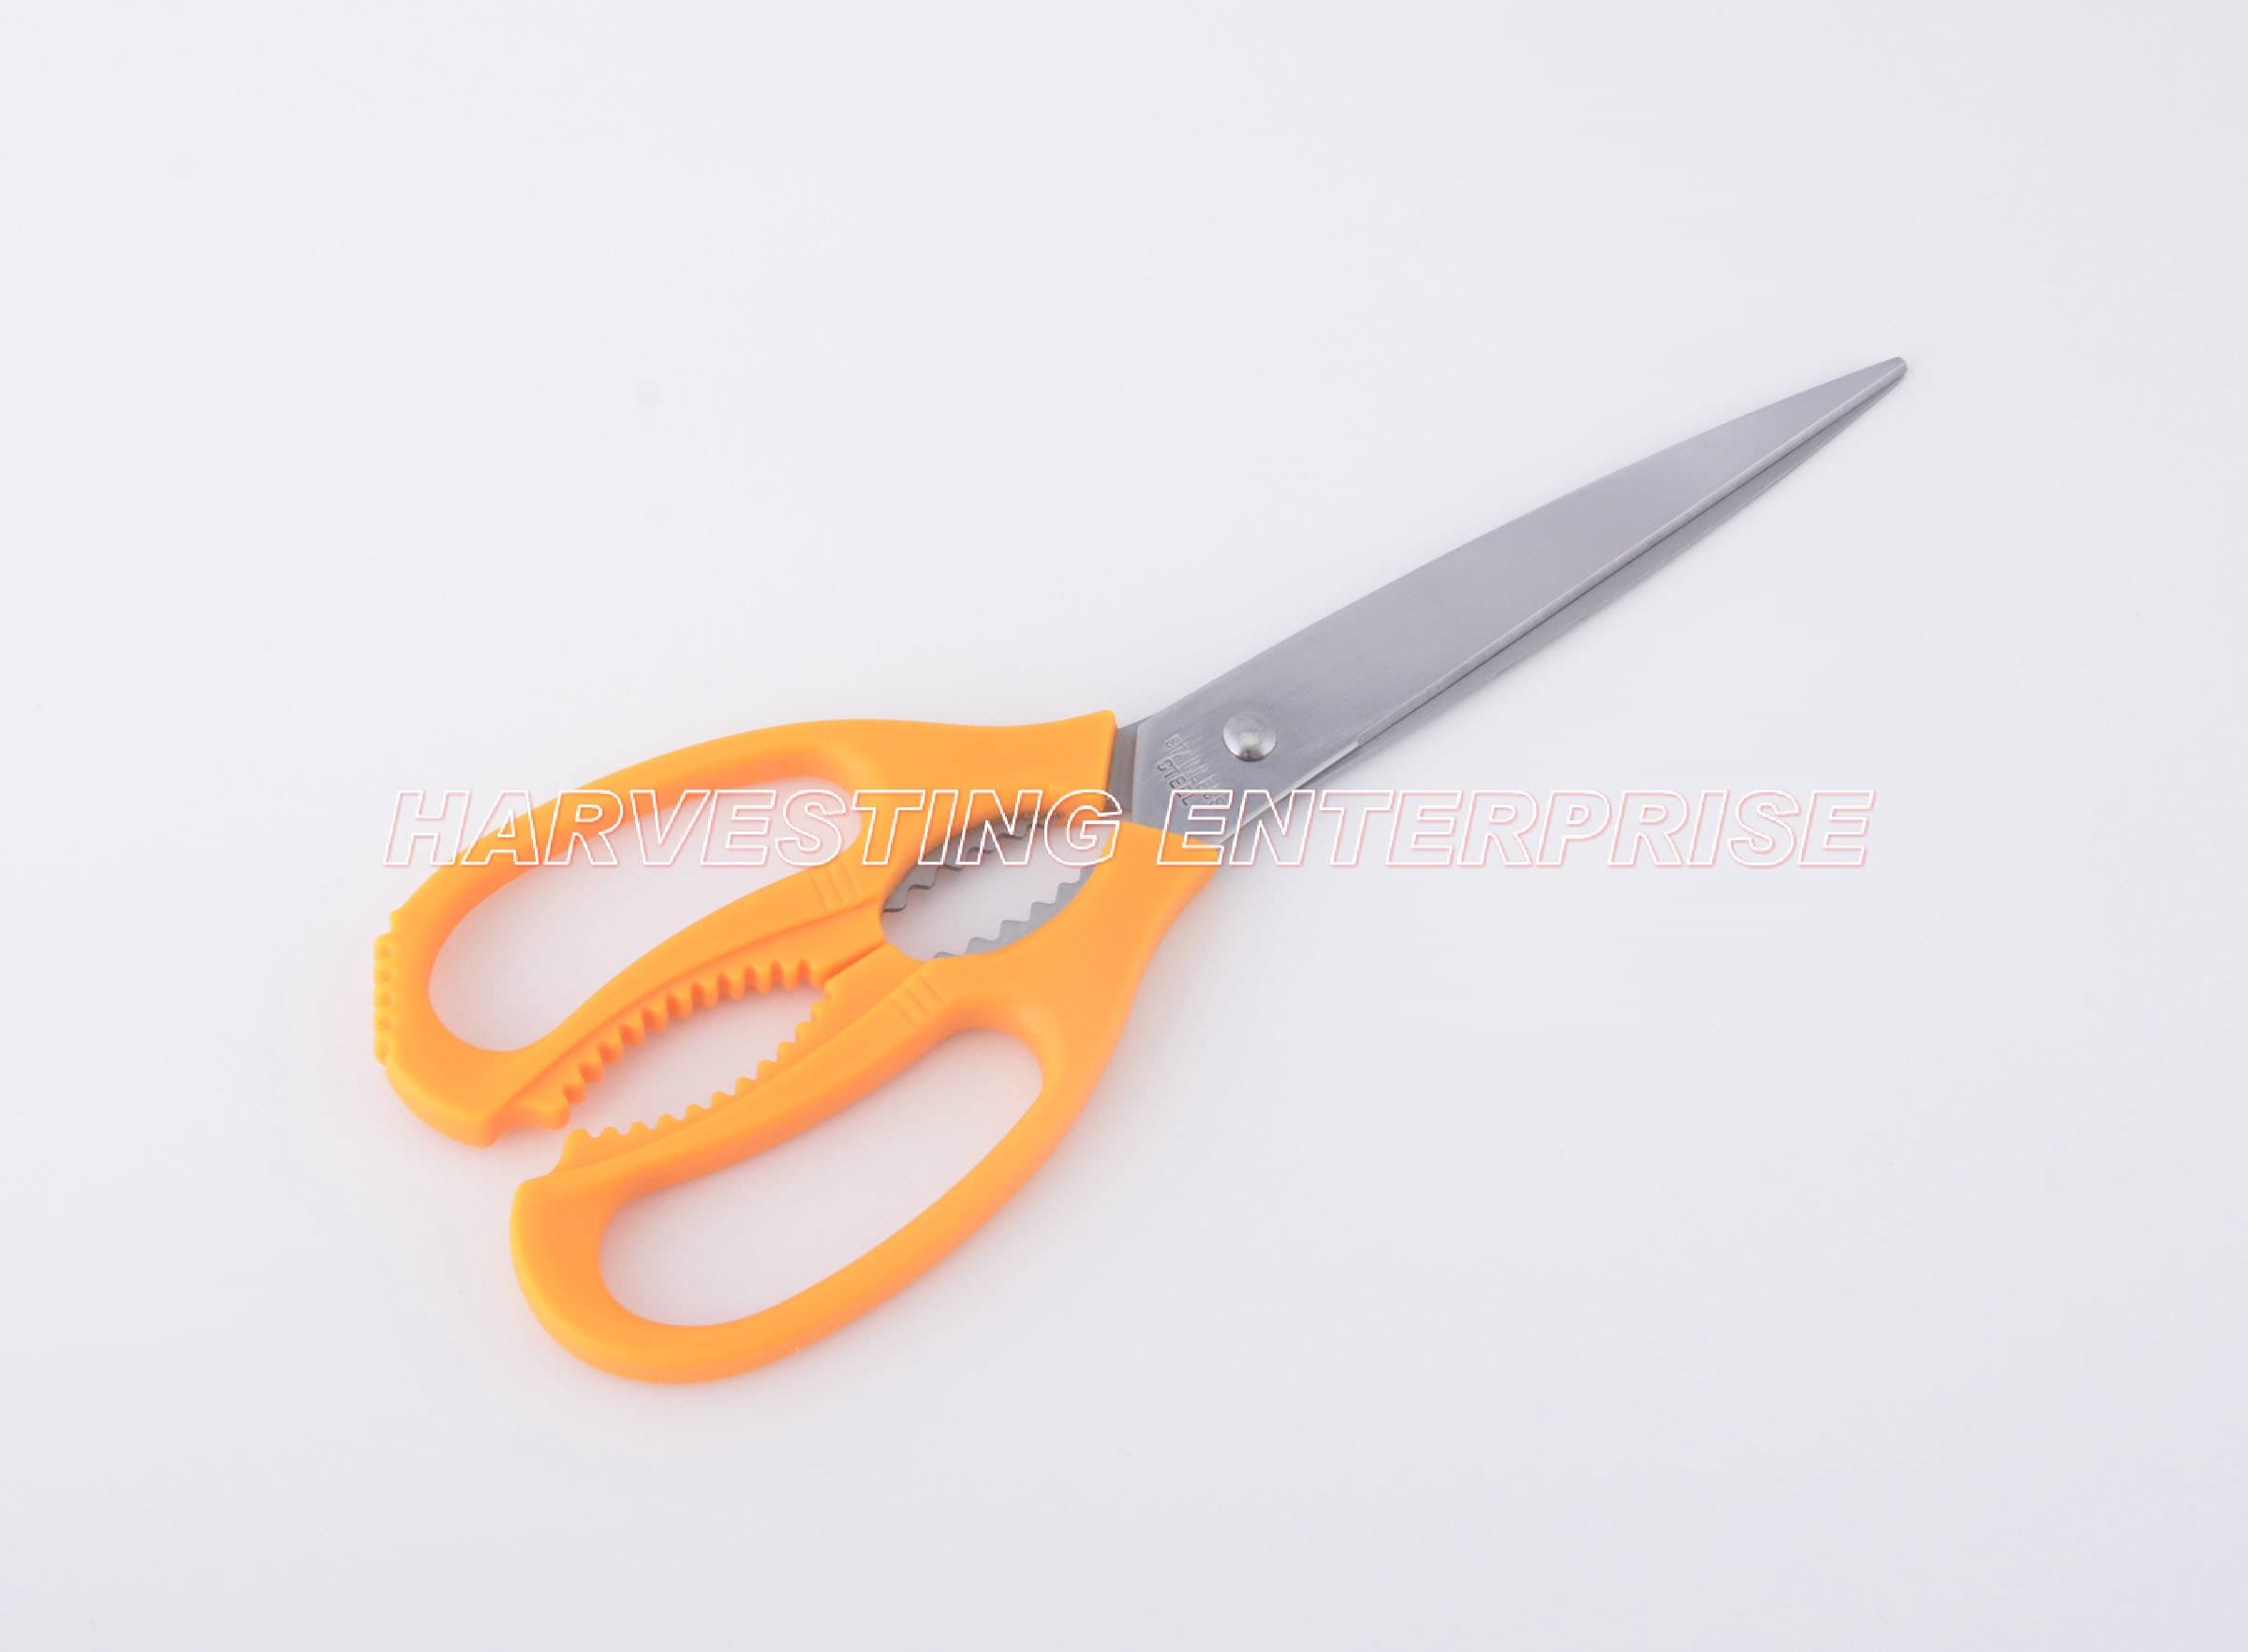 Stainless steel utility scissors